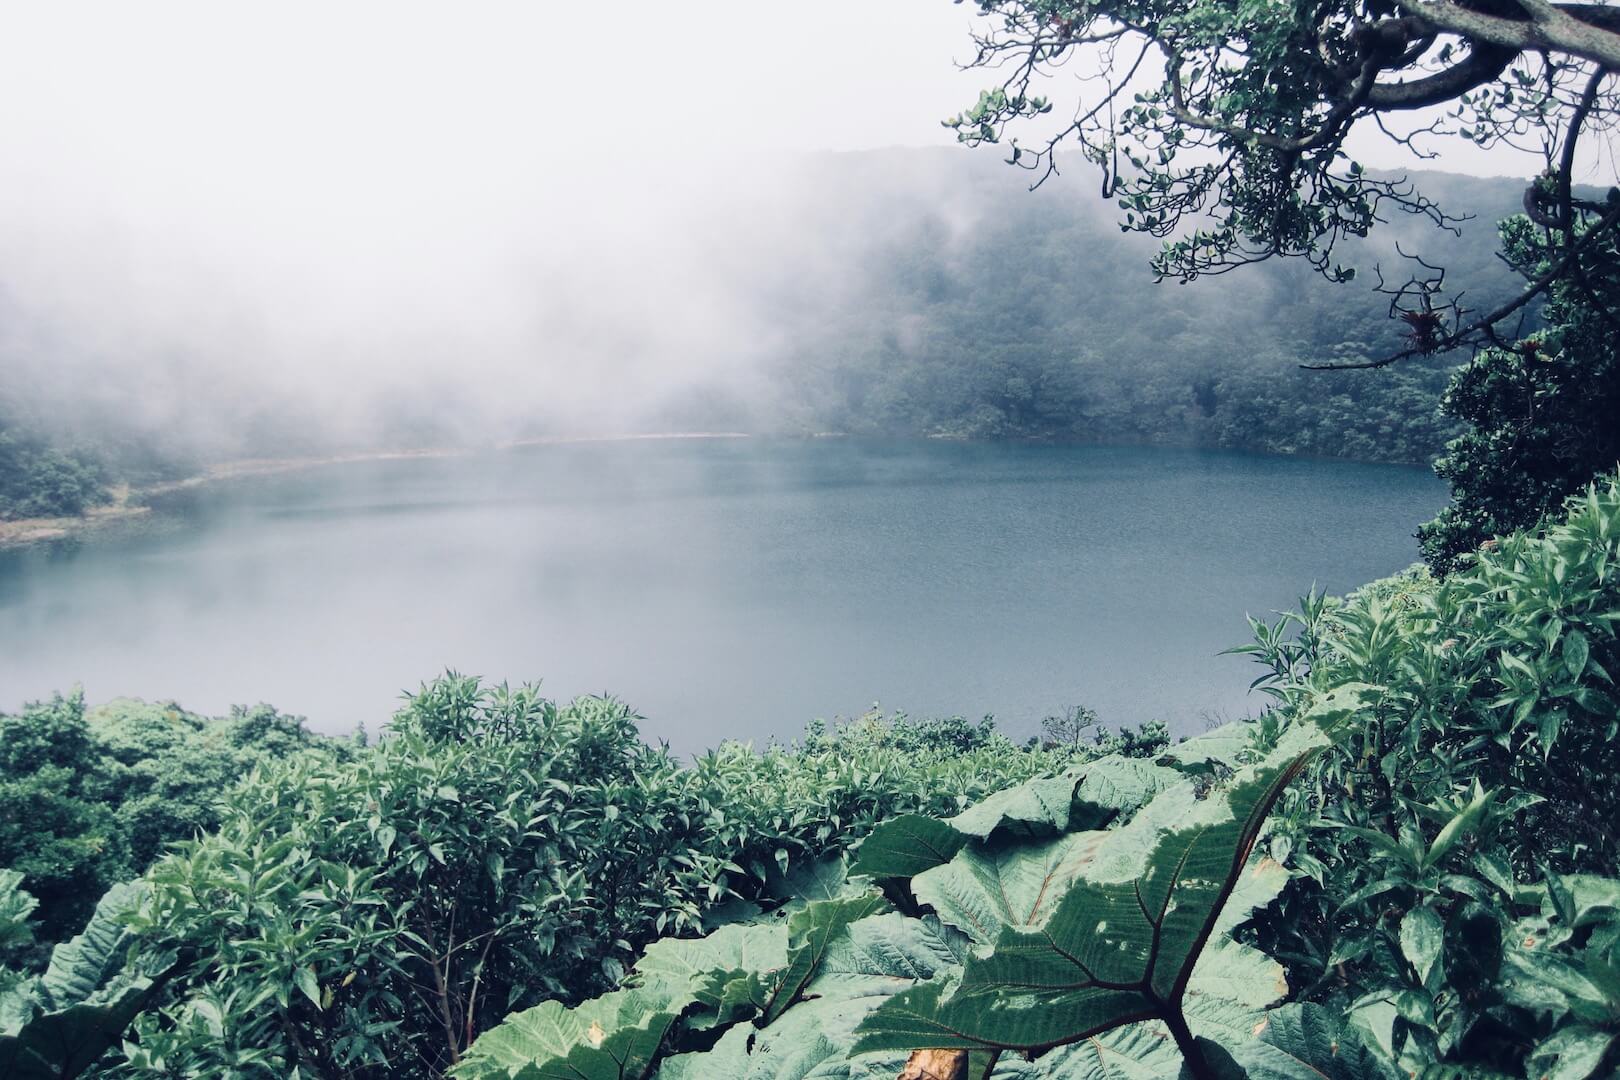 The Noriega Tapes Chapter 42 - Honduras - Olanchito - Volcano Lake